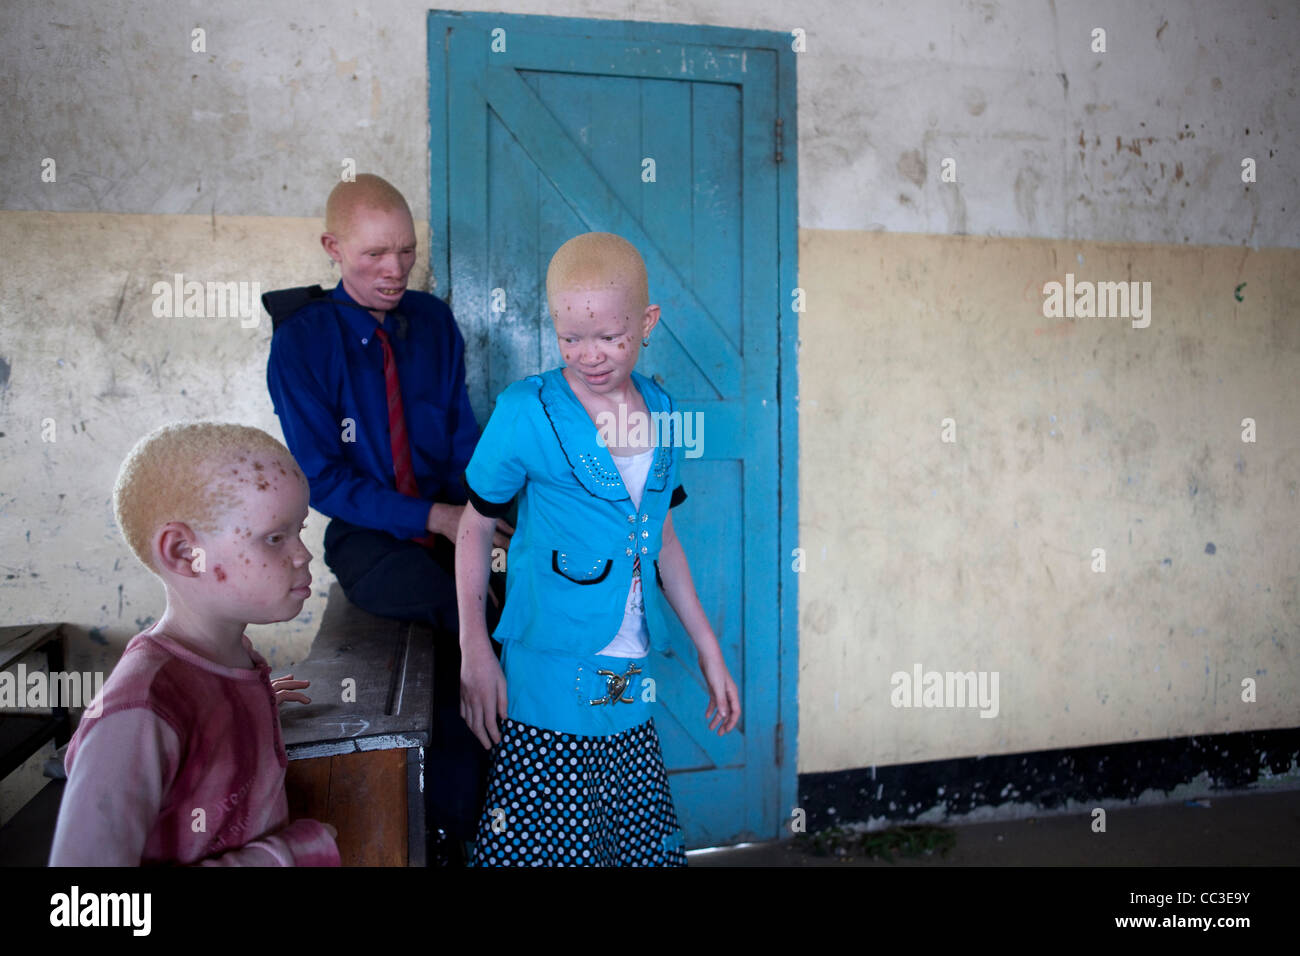 Albinos in Tanzania Stock Photo